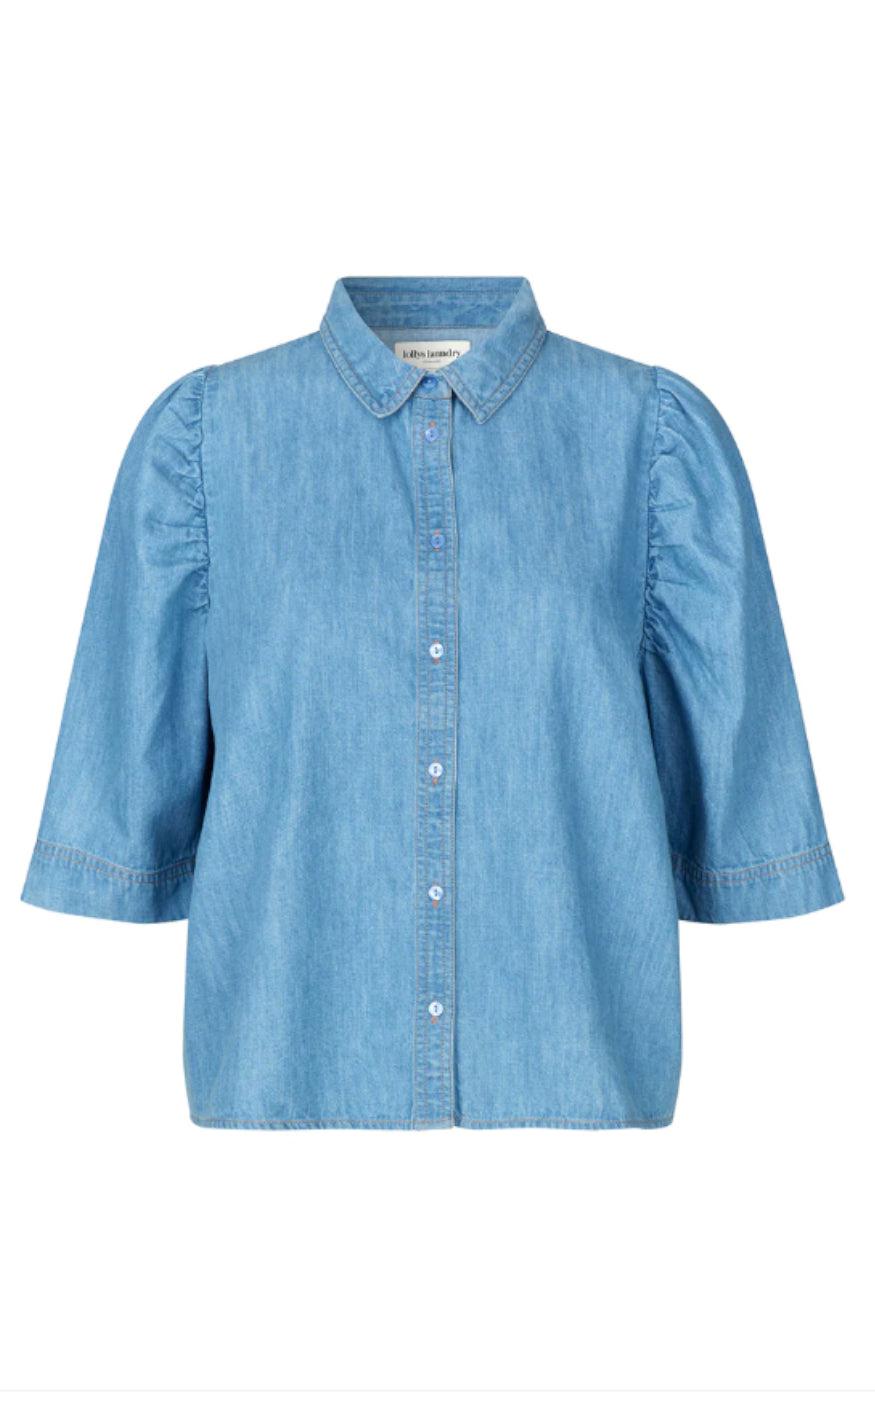 Se Lollys Laundry Skjorte - Bono - Light Blue hos Fashionbystrand